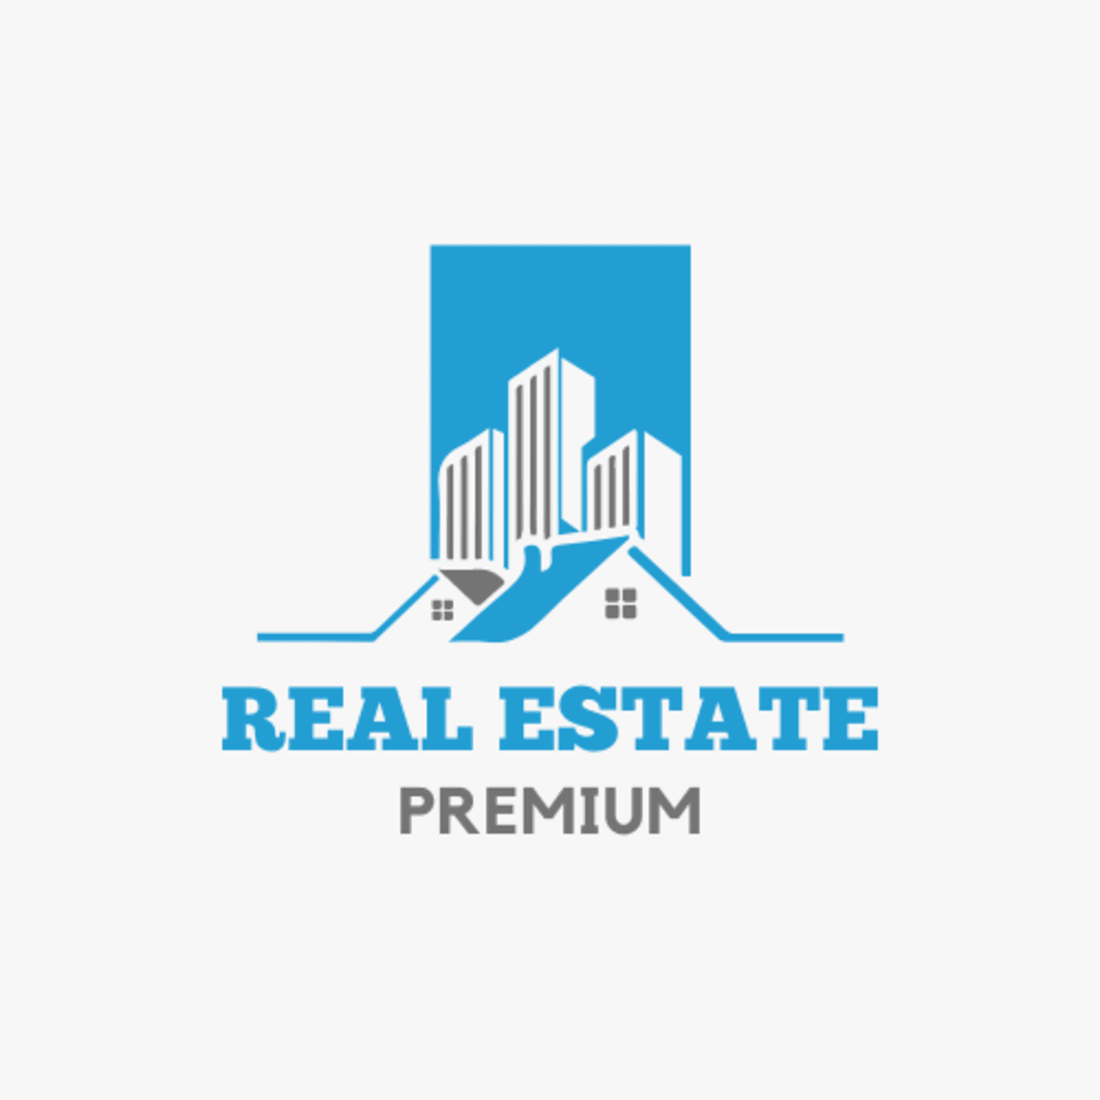 Real Estate logos preview image.